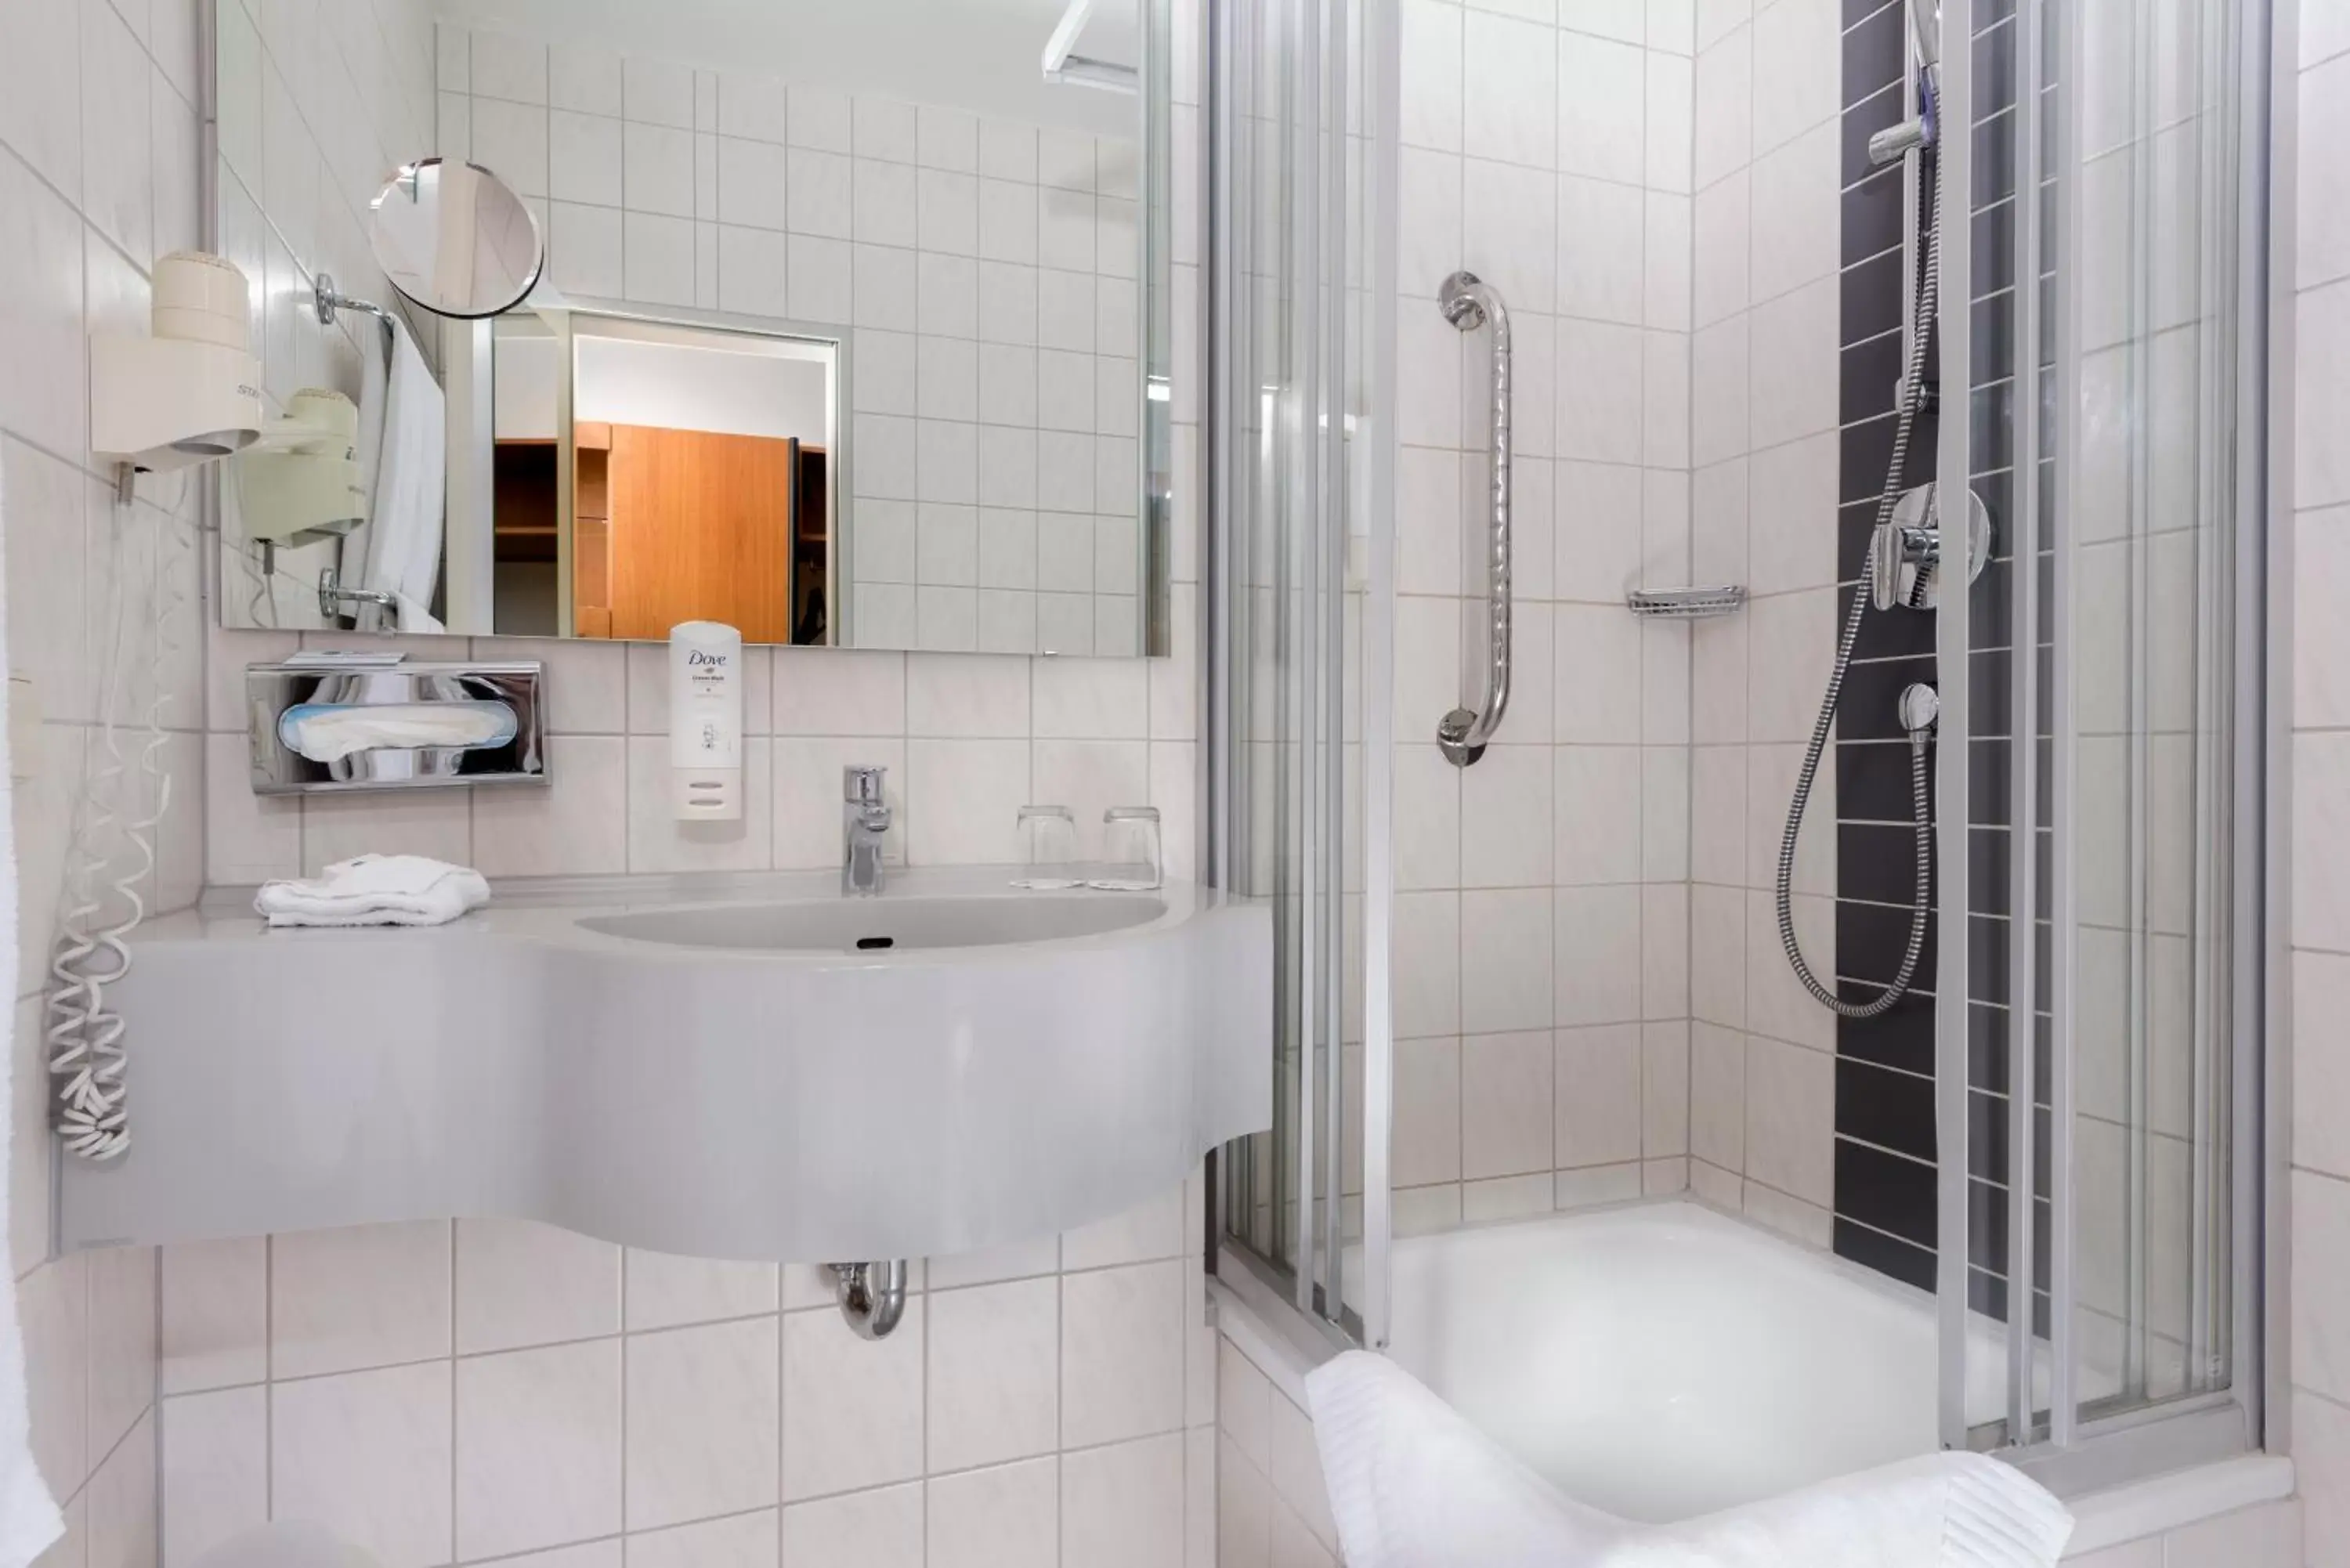 Photo of the whole room, Bathroom in Best Western Hotel Rastatt